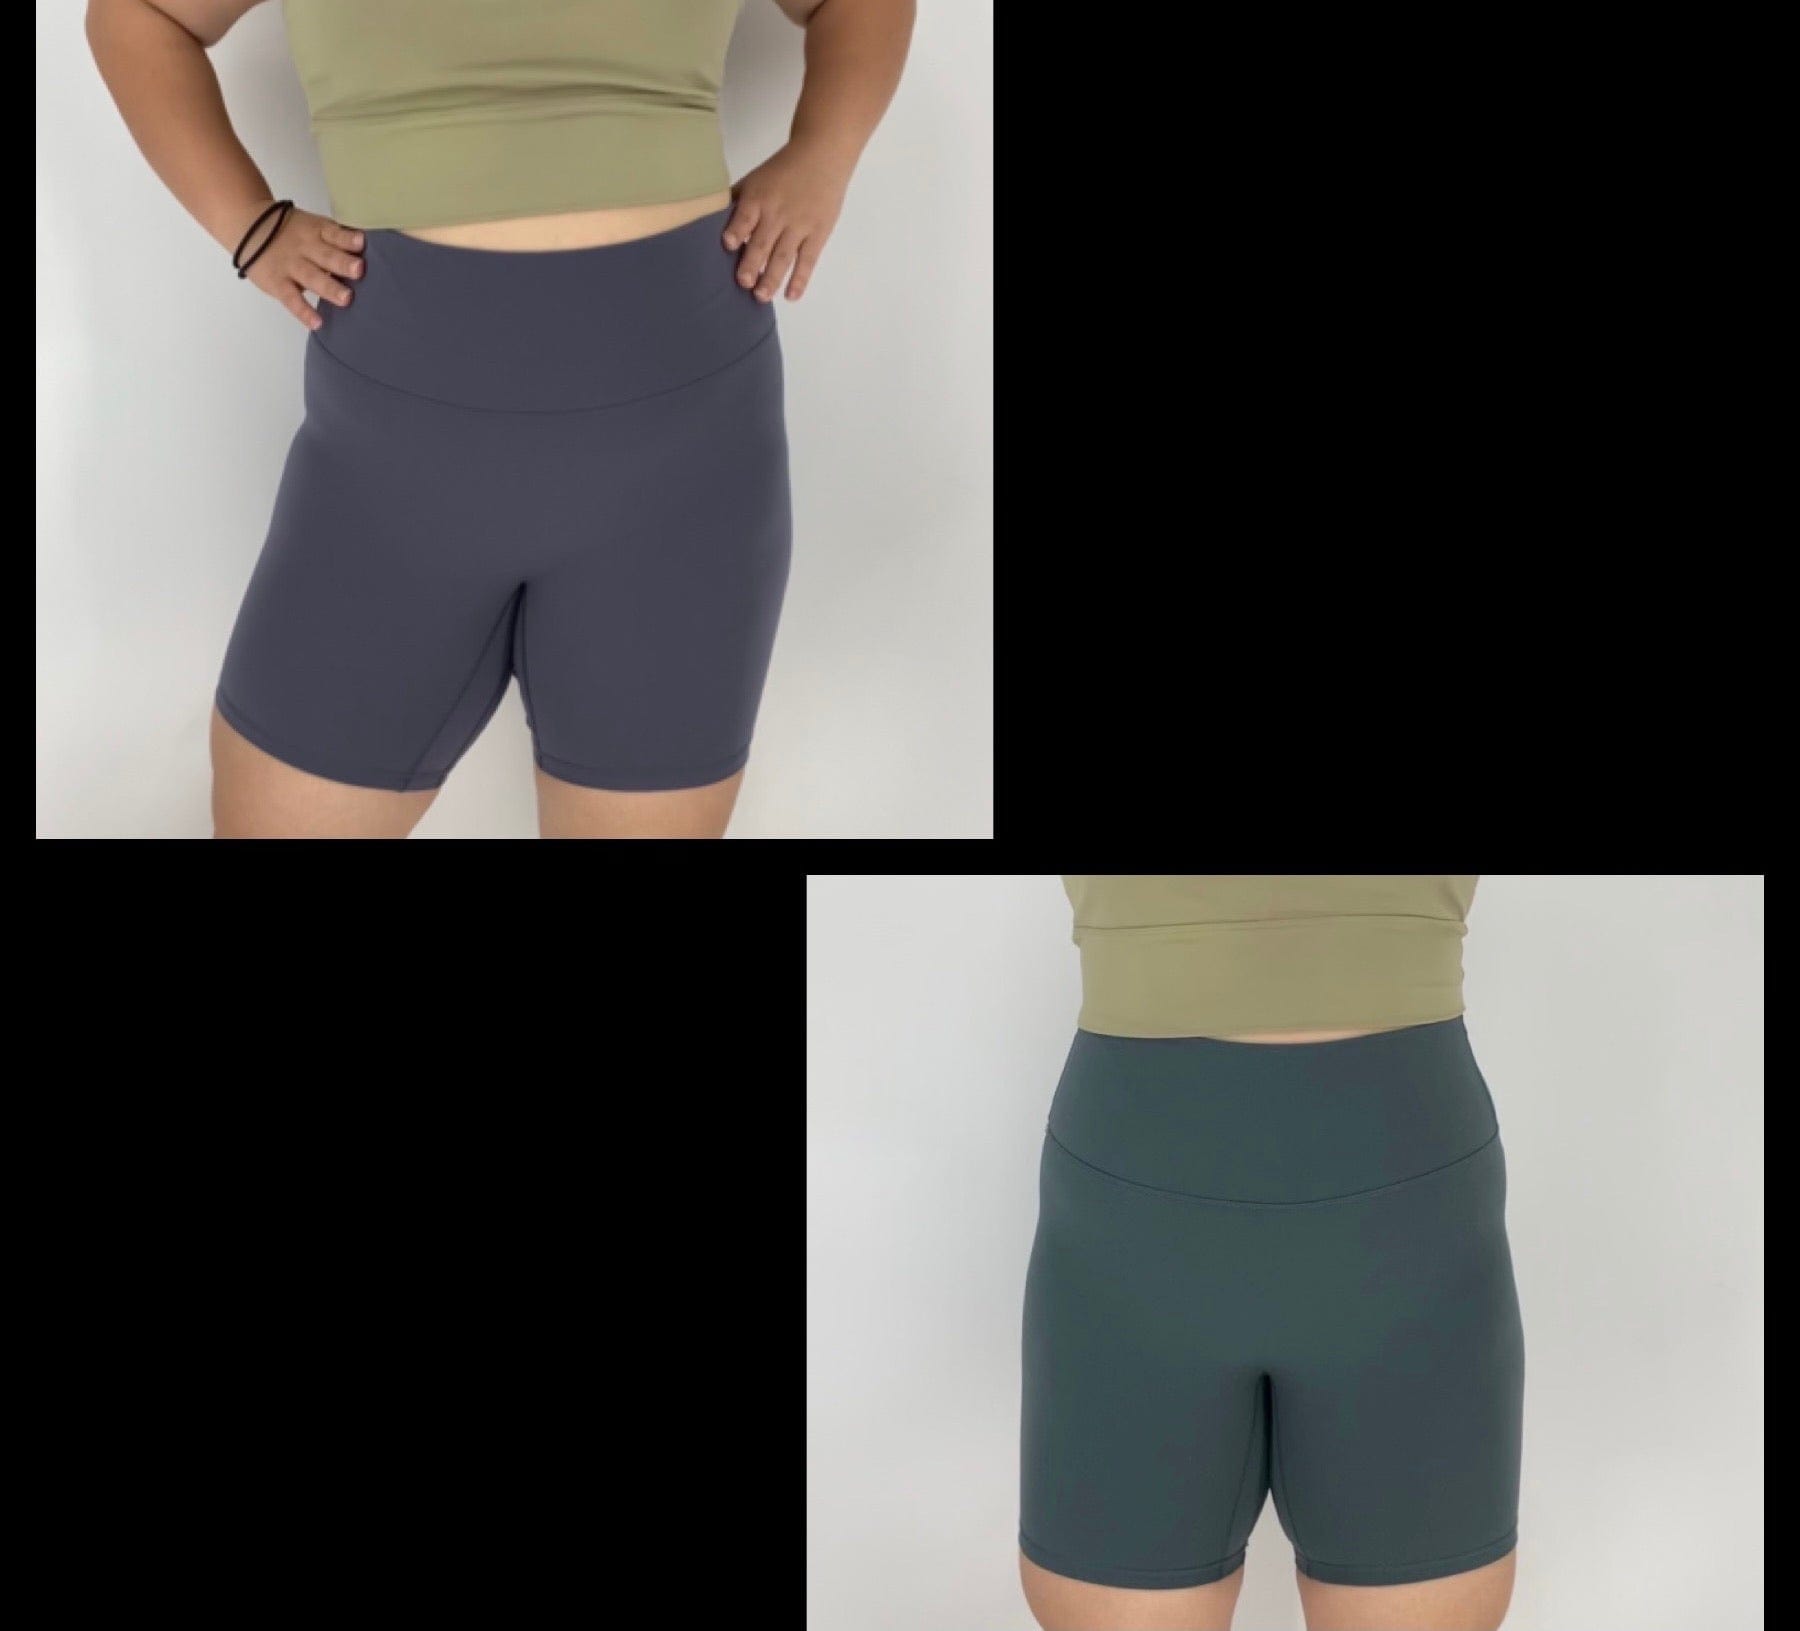 Everyday seamless shorts (6 inch inseam)